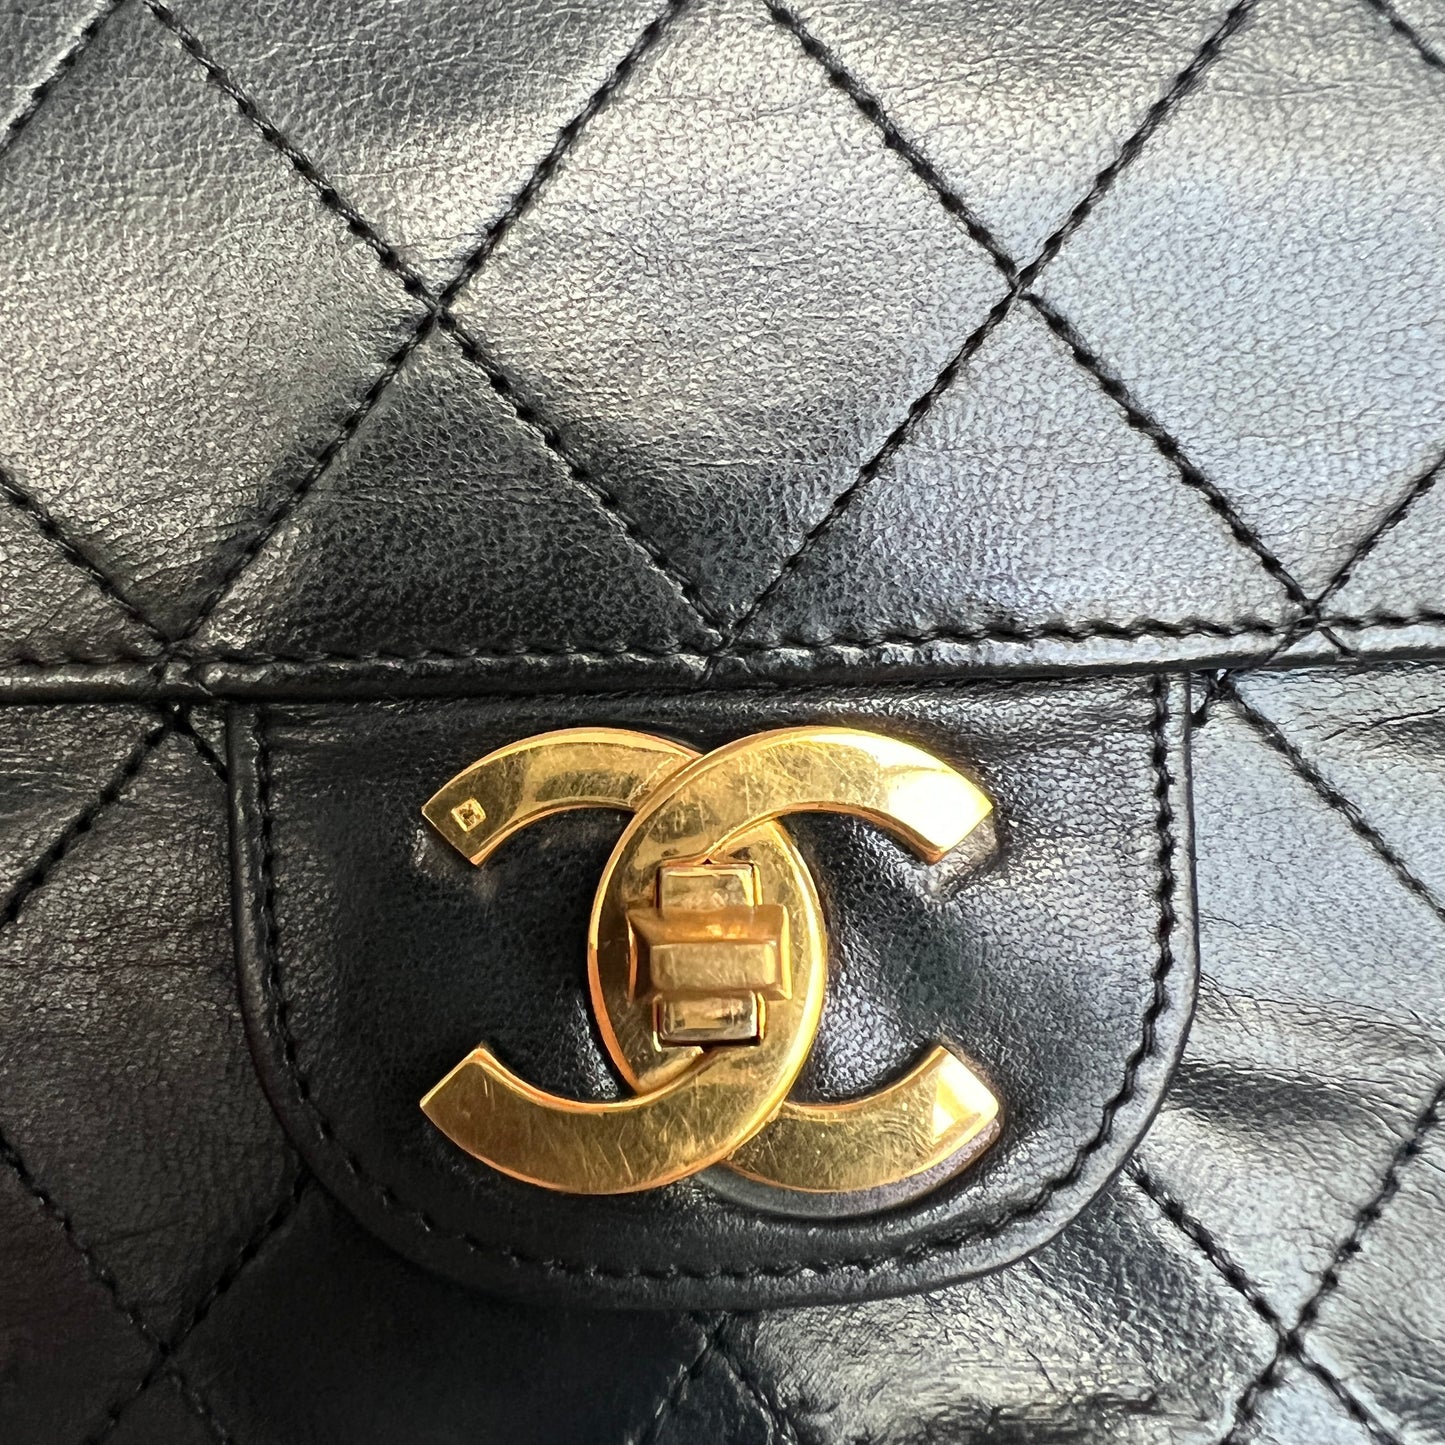 Black Leather Classic Flap Bag